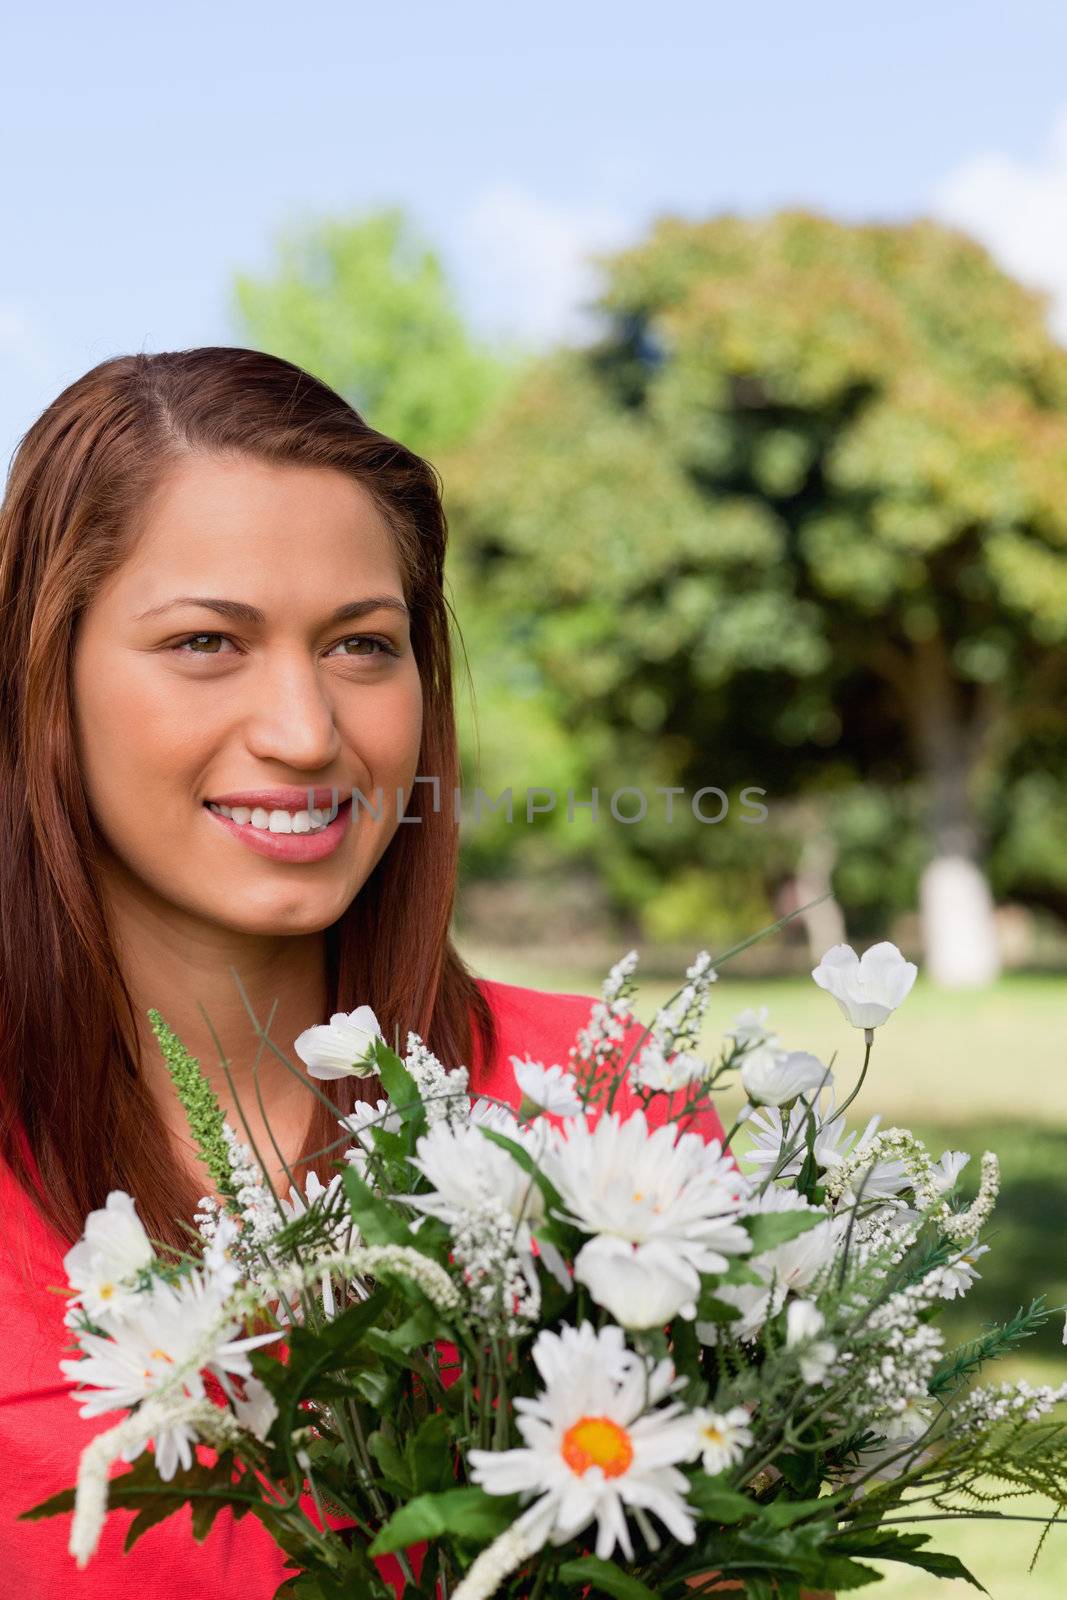 Woman looking towards the side flowers in a park by Wavebreakmedia